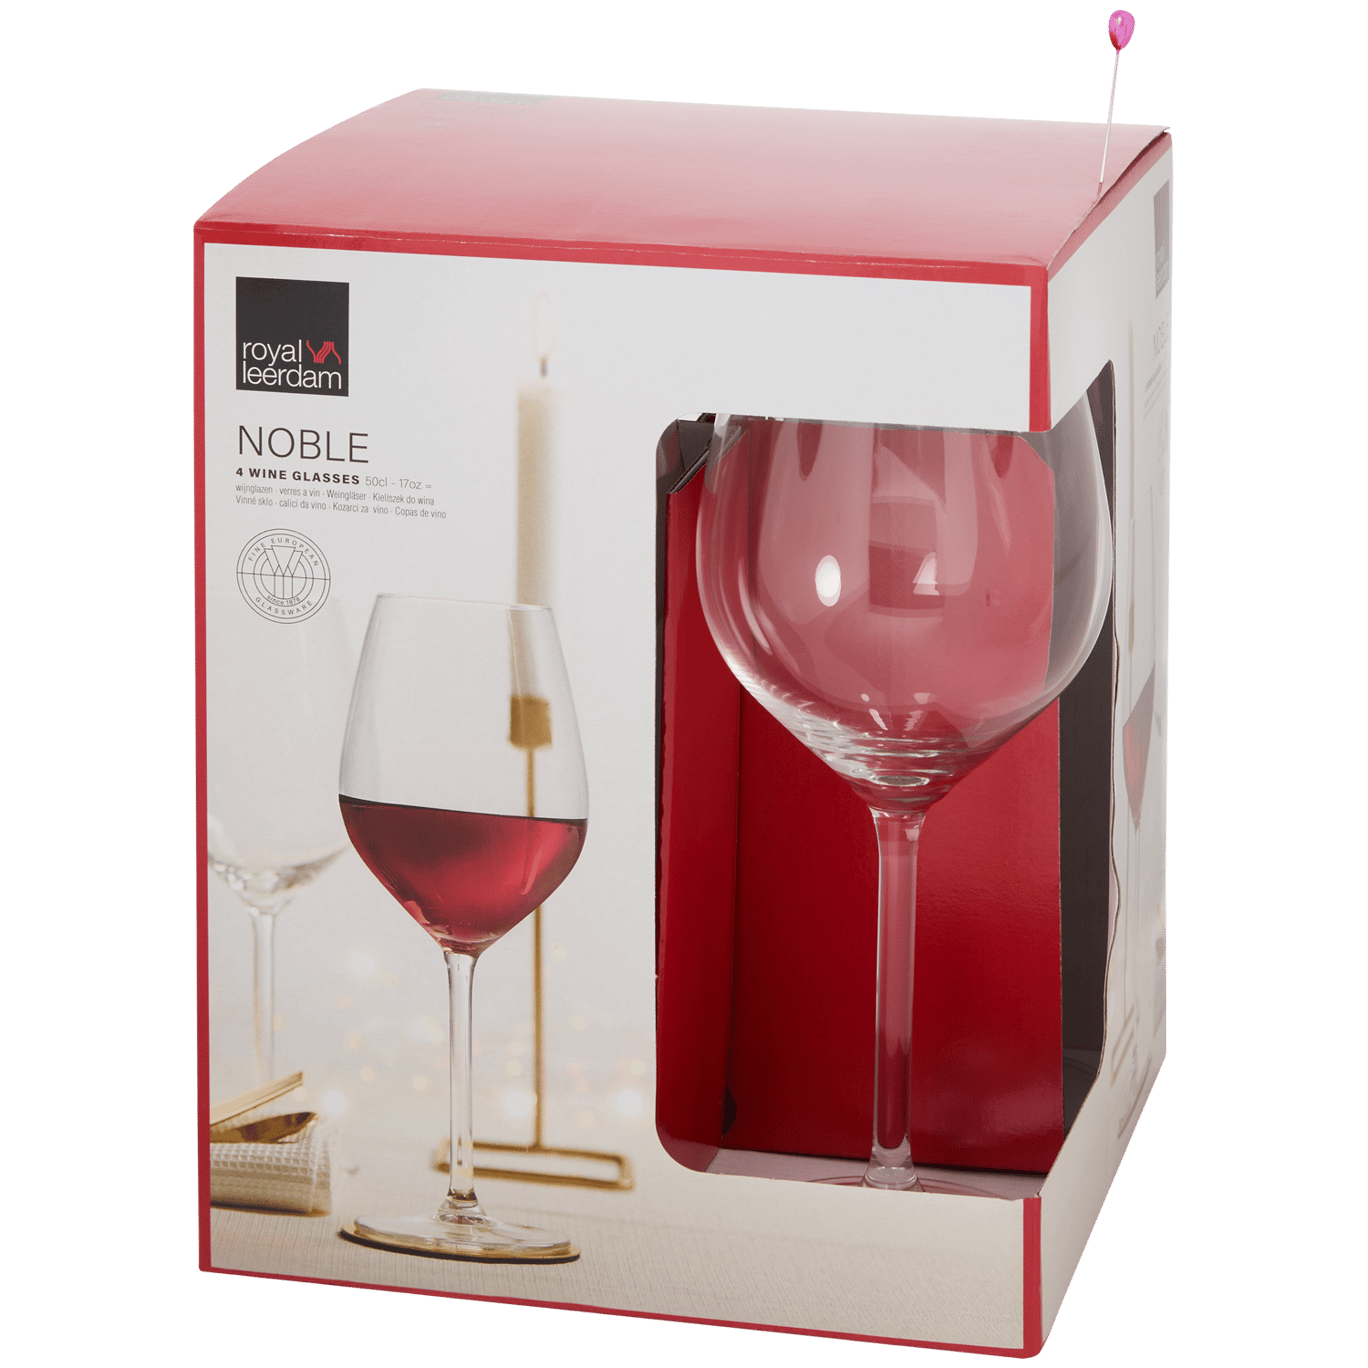 Kieliszki do wina Royal Leerdam